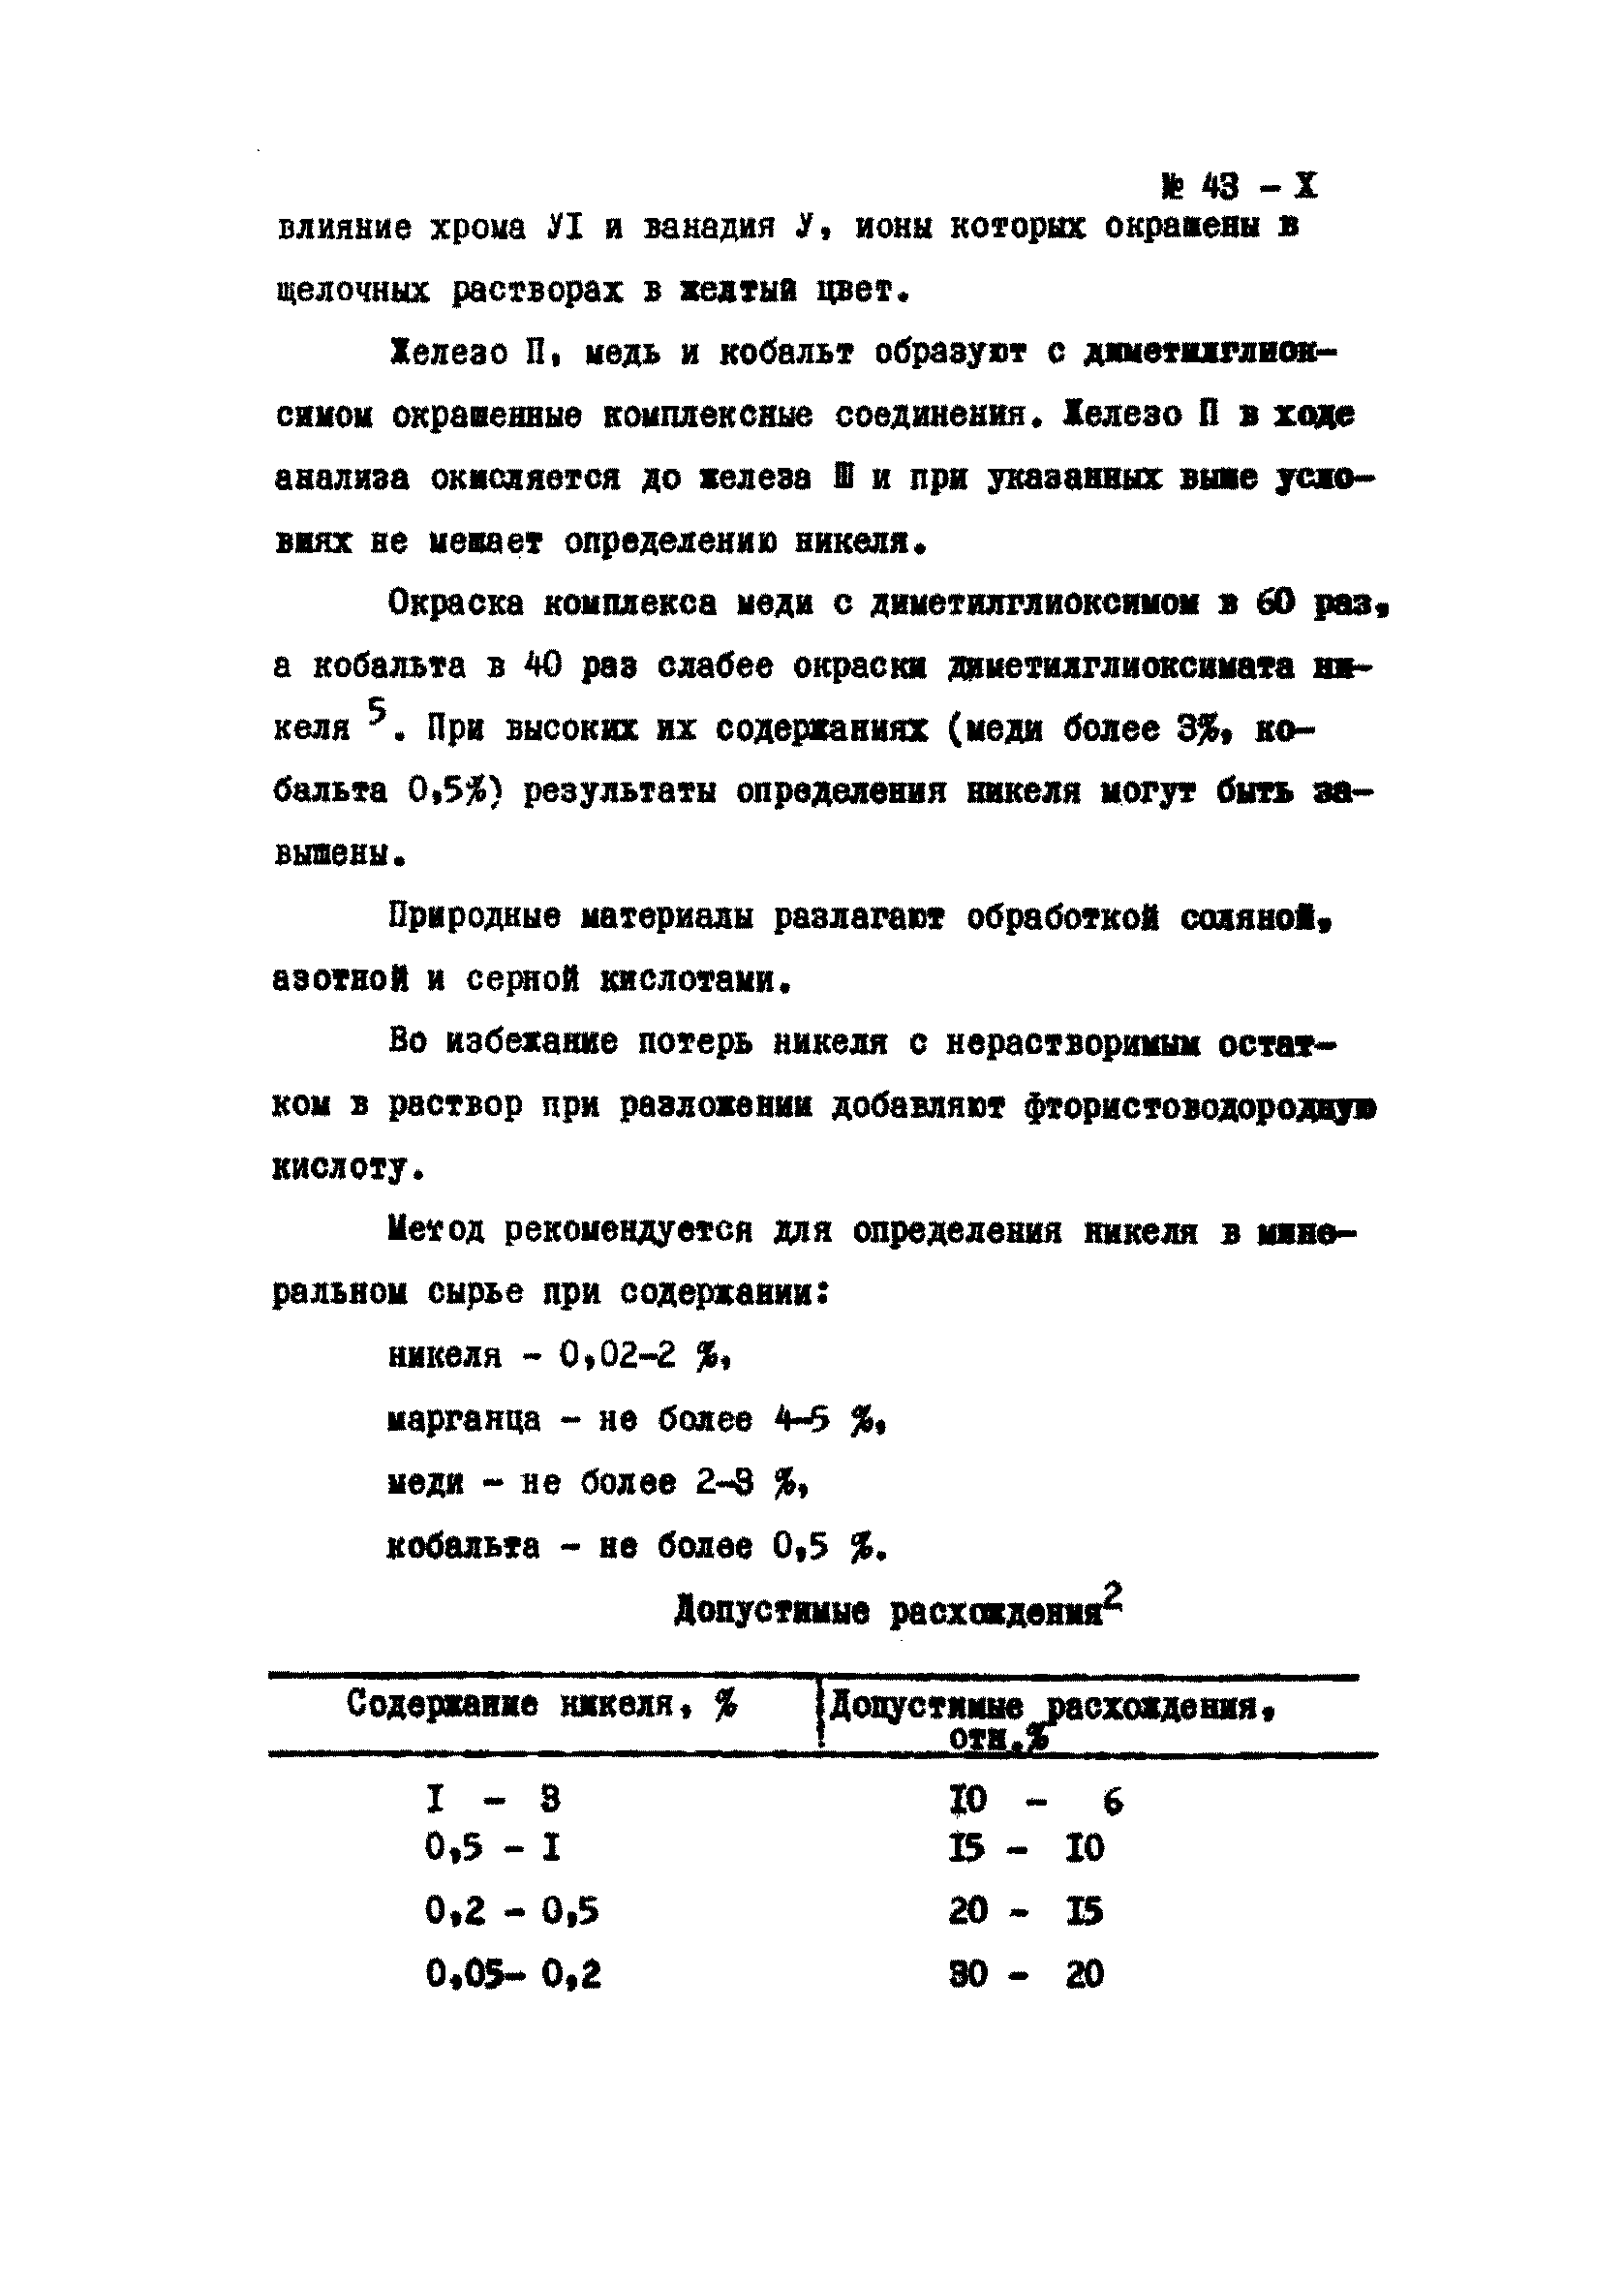 Инструкция НСАМ 43-Х